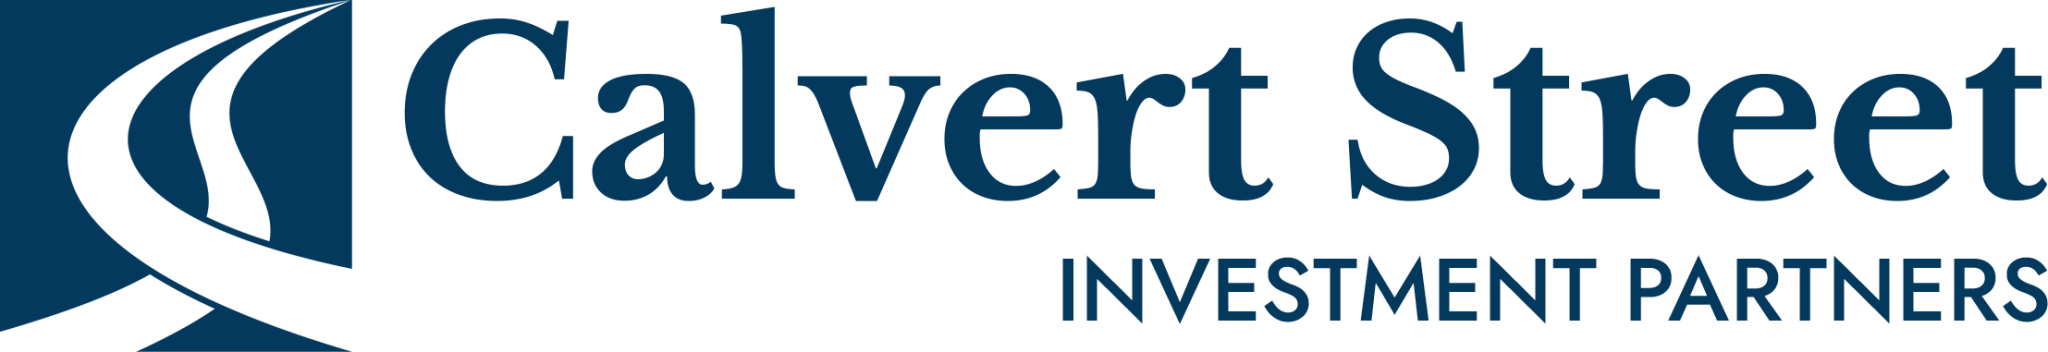 Private Equity | Calvert Street Investment Partners | Corporate Rebranding